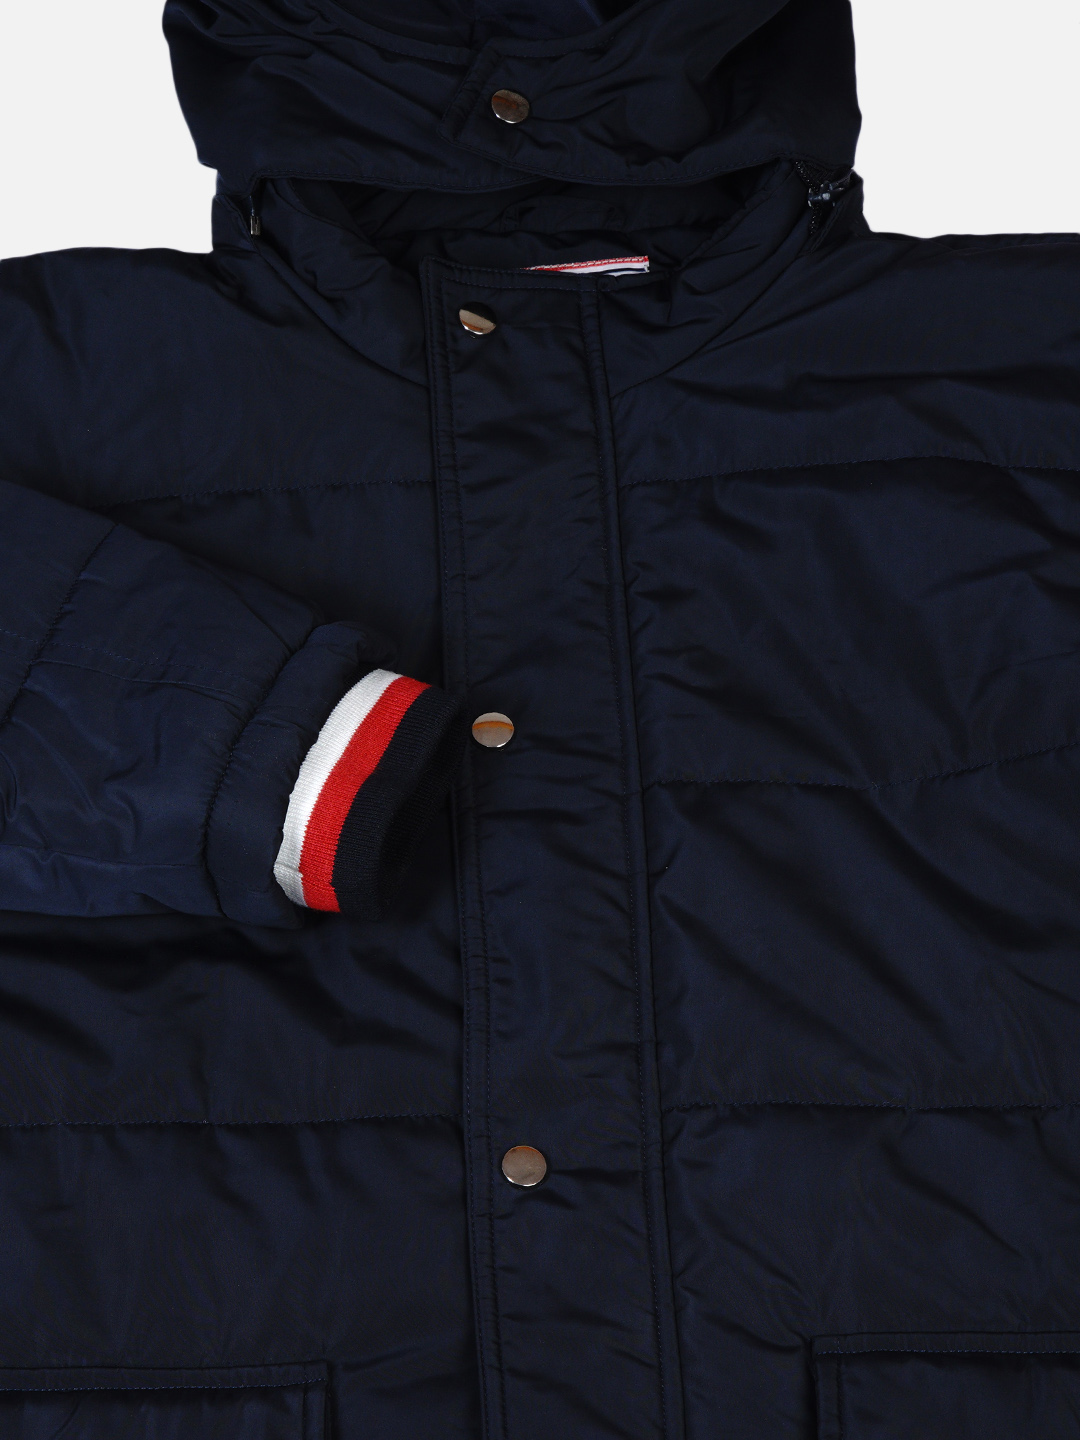 winterwear/jackets/JPJKT73004/jpjkt73004-5.jpg